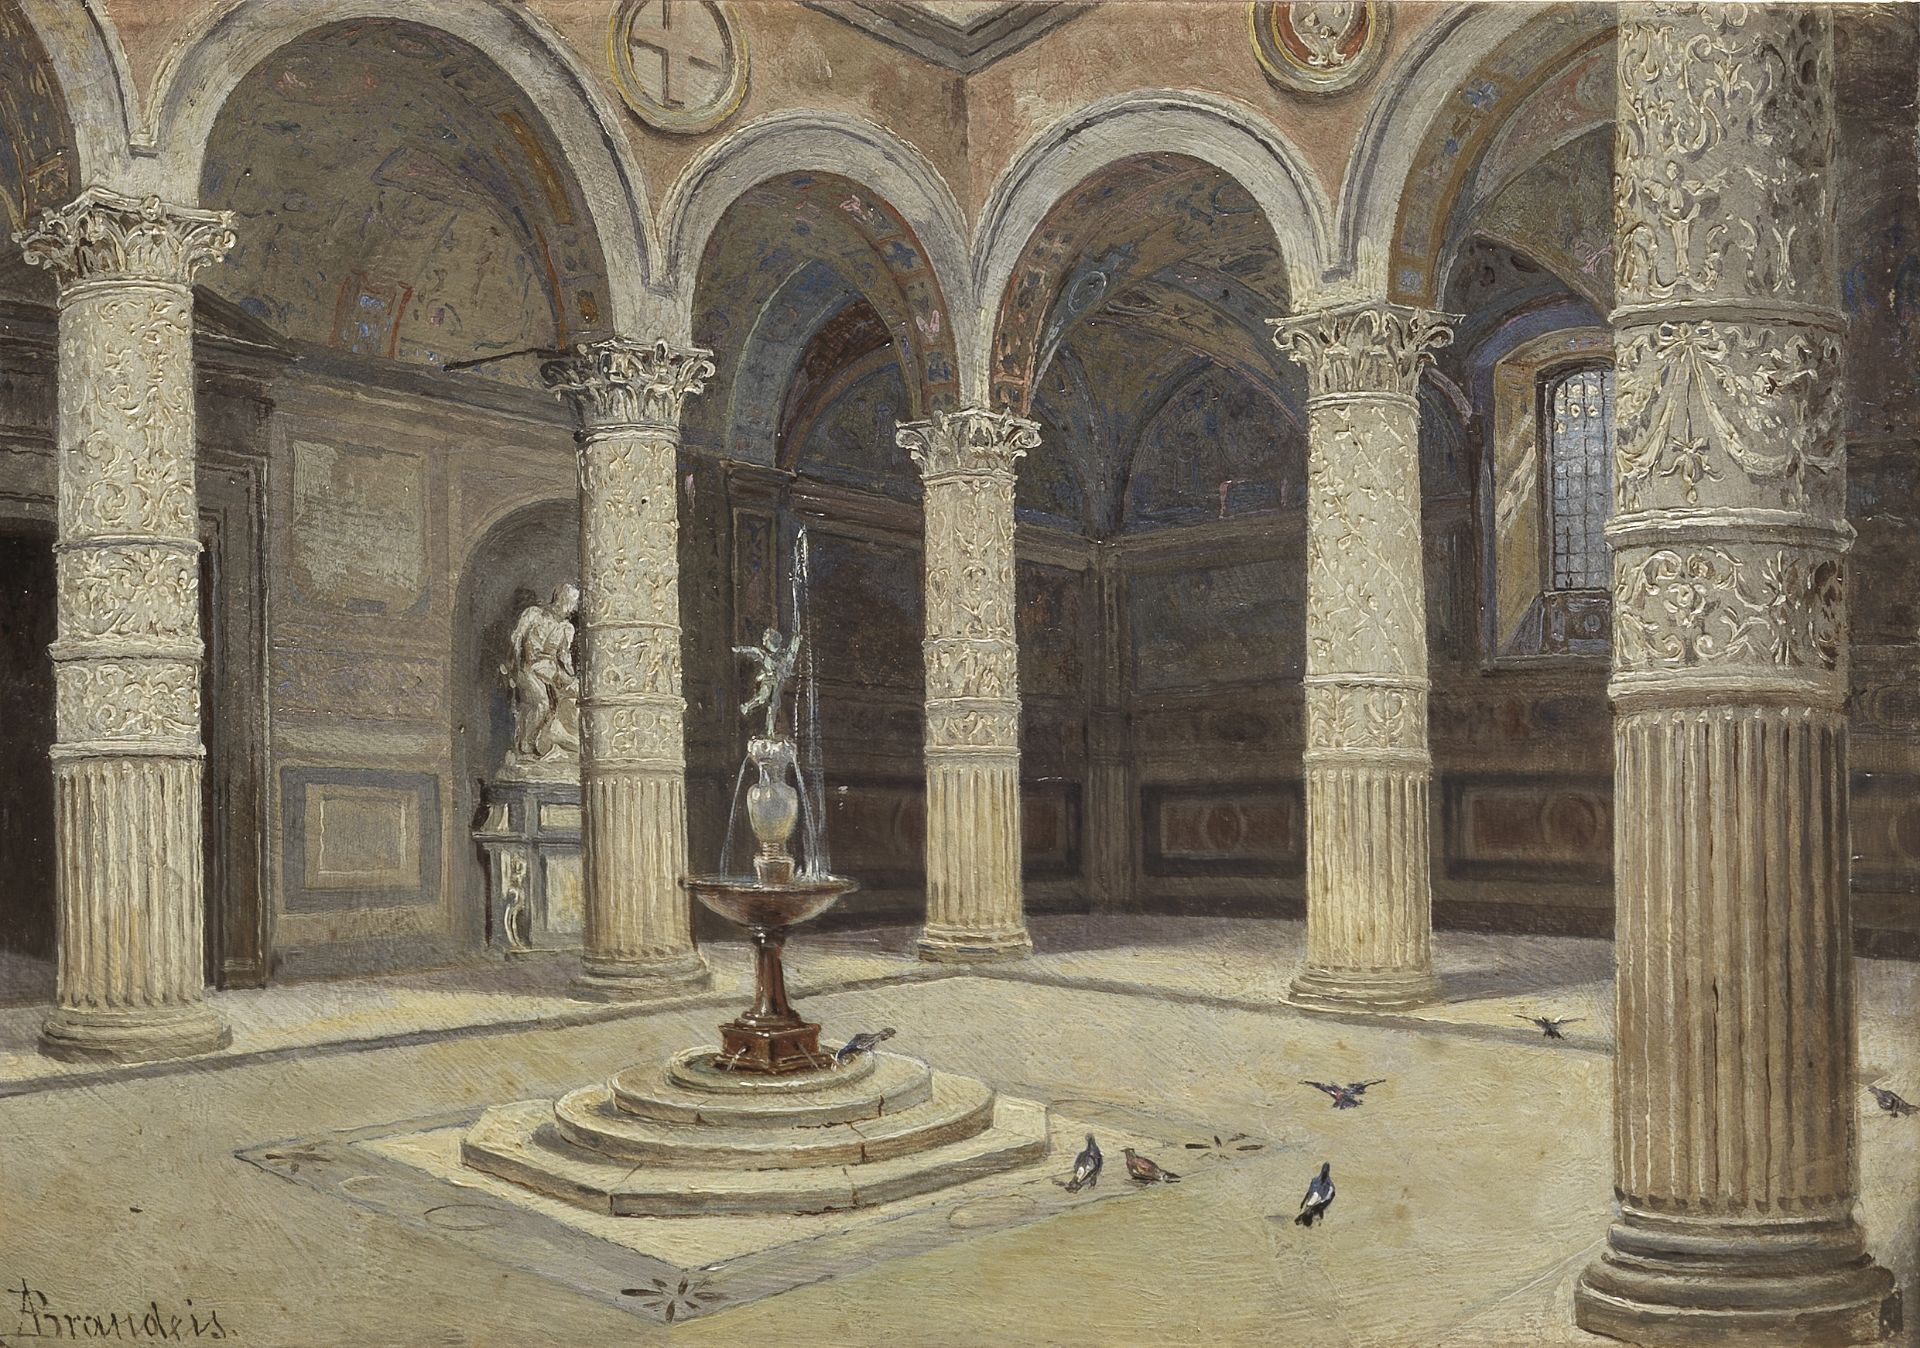 Antonietta Brandeis (Czech, 1849-1926) The courtyard of the Palazzo Vecchio, Florence